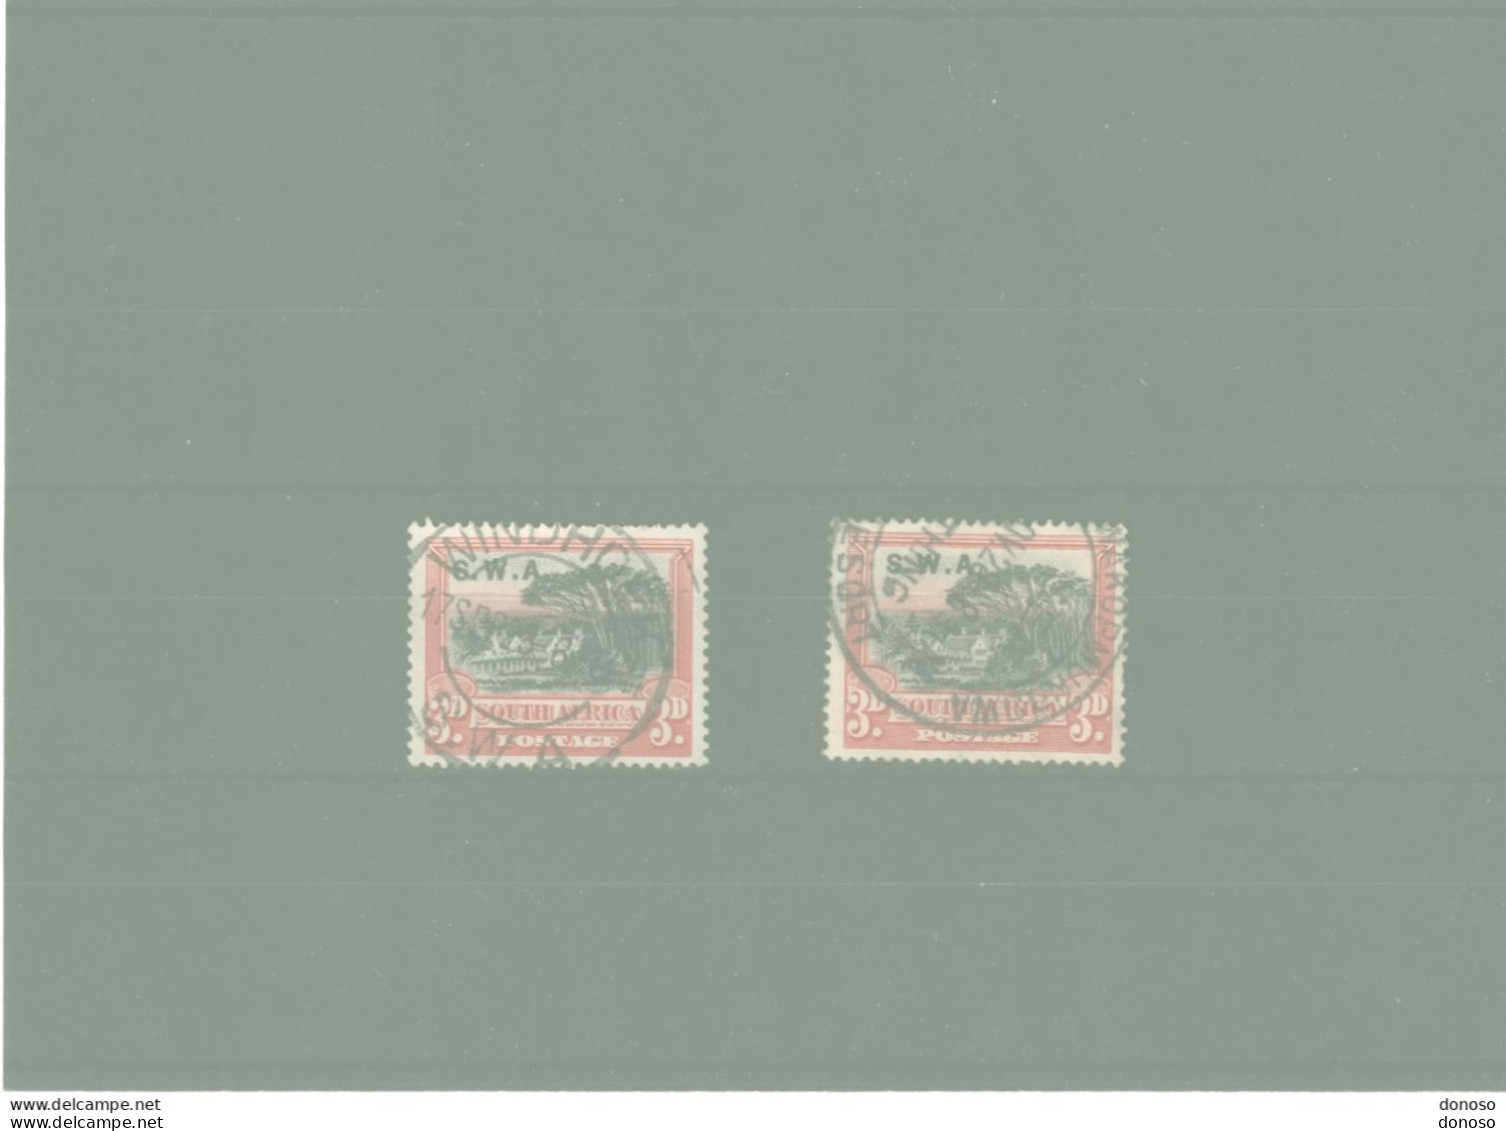 SWA SUD OUEST AFRICAIN 1927 Yvert  87 + 96 Oblitéré, Cote 4 Euros - Zuidwest-Afrika (1923-1990)